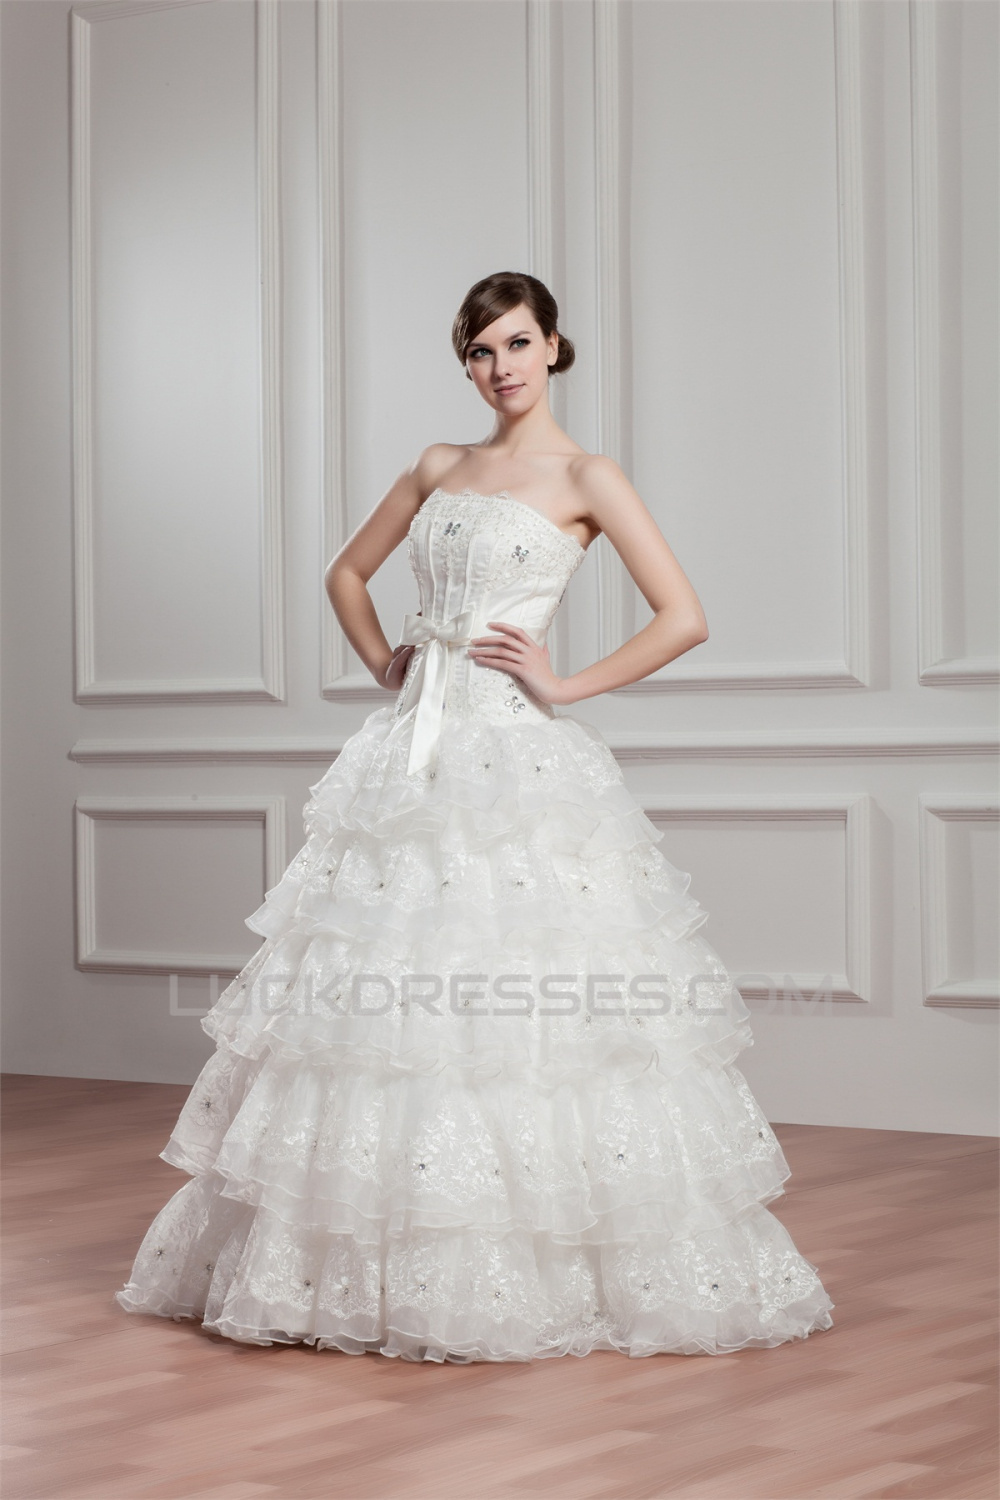 Breathtaking Ball Gown Lace Organza Taffeta Sleeveless Wedding Dresses 2030641 1436